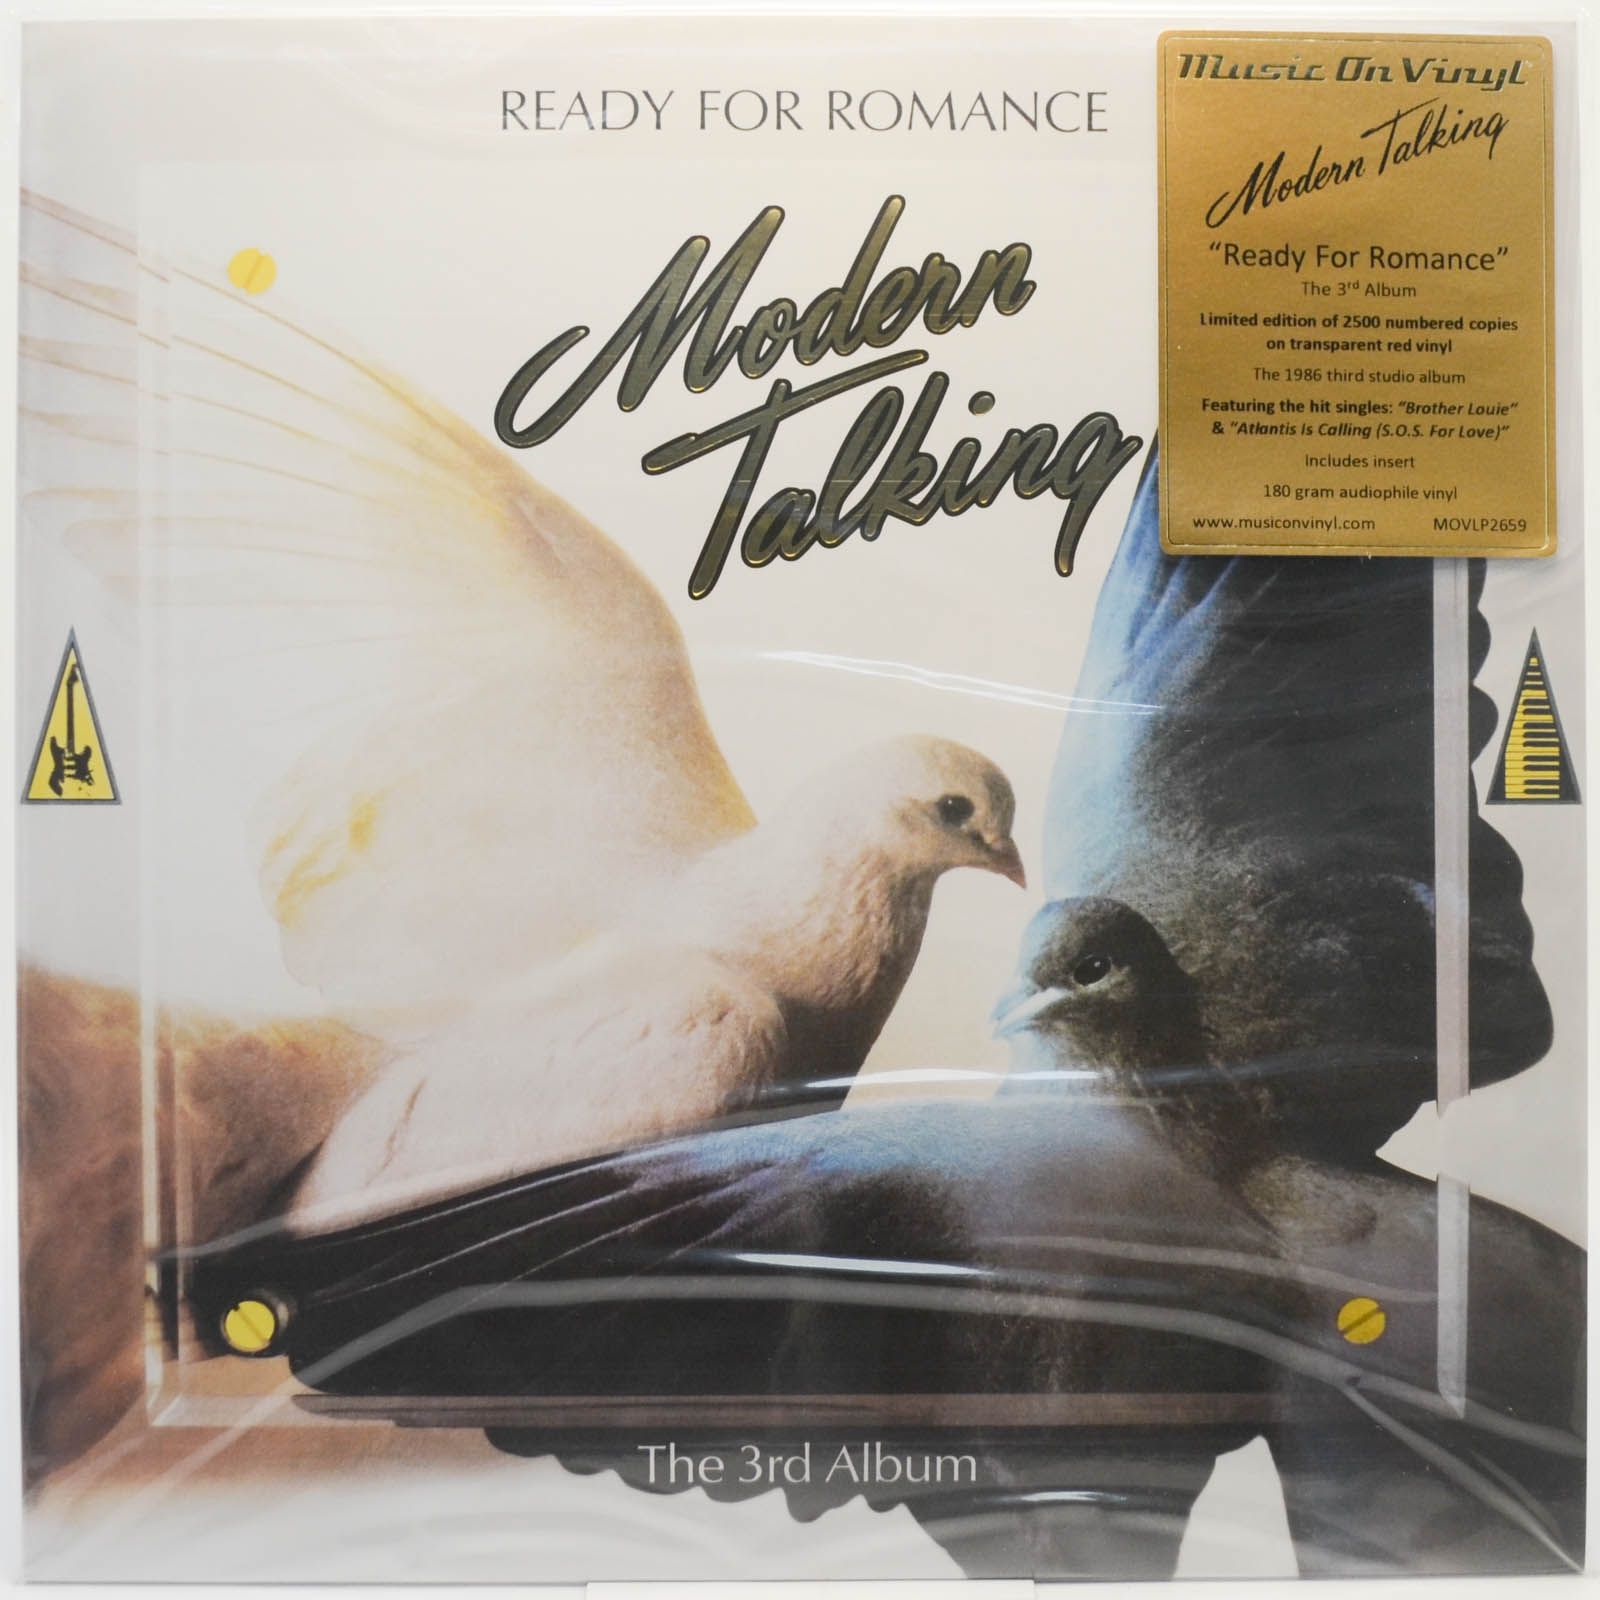 Modern Talking — Ready For Romance - The 3rd Album, 1986